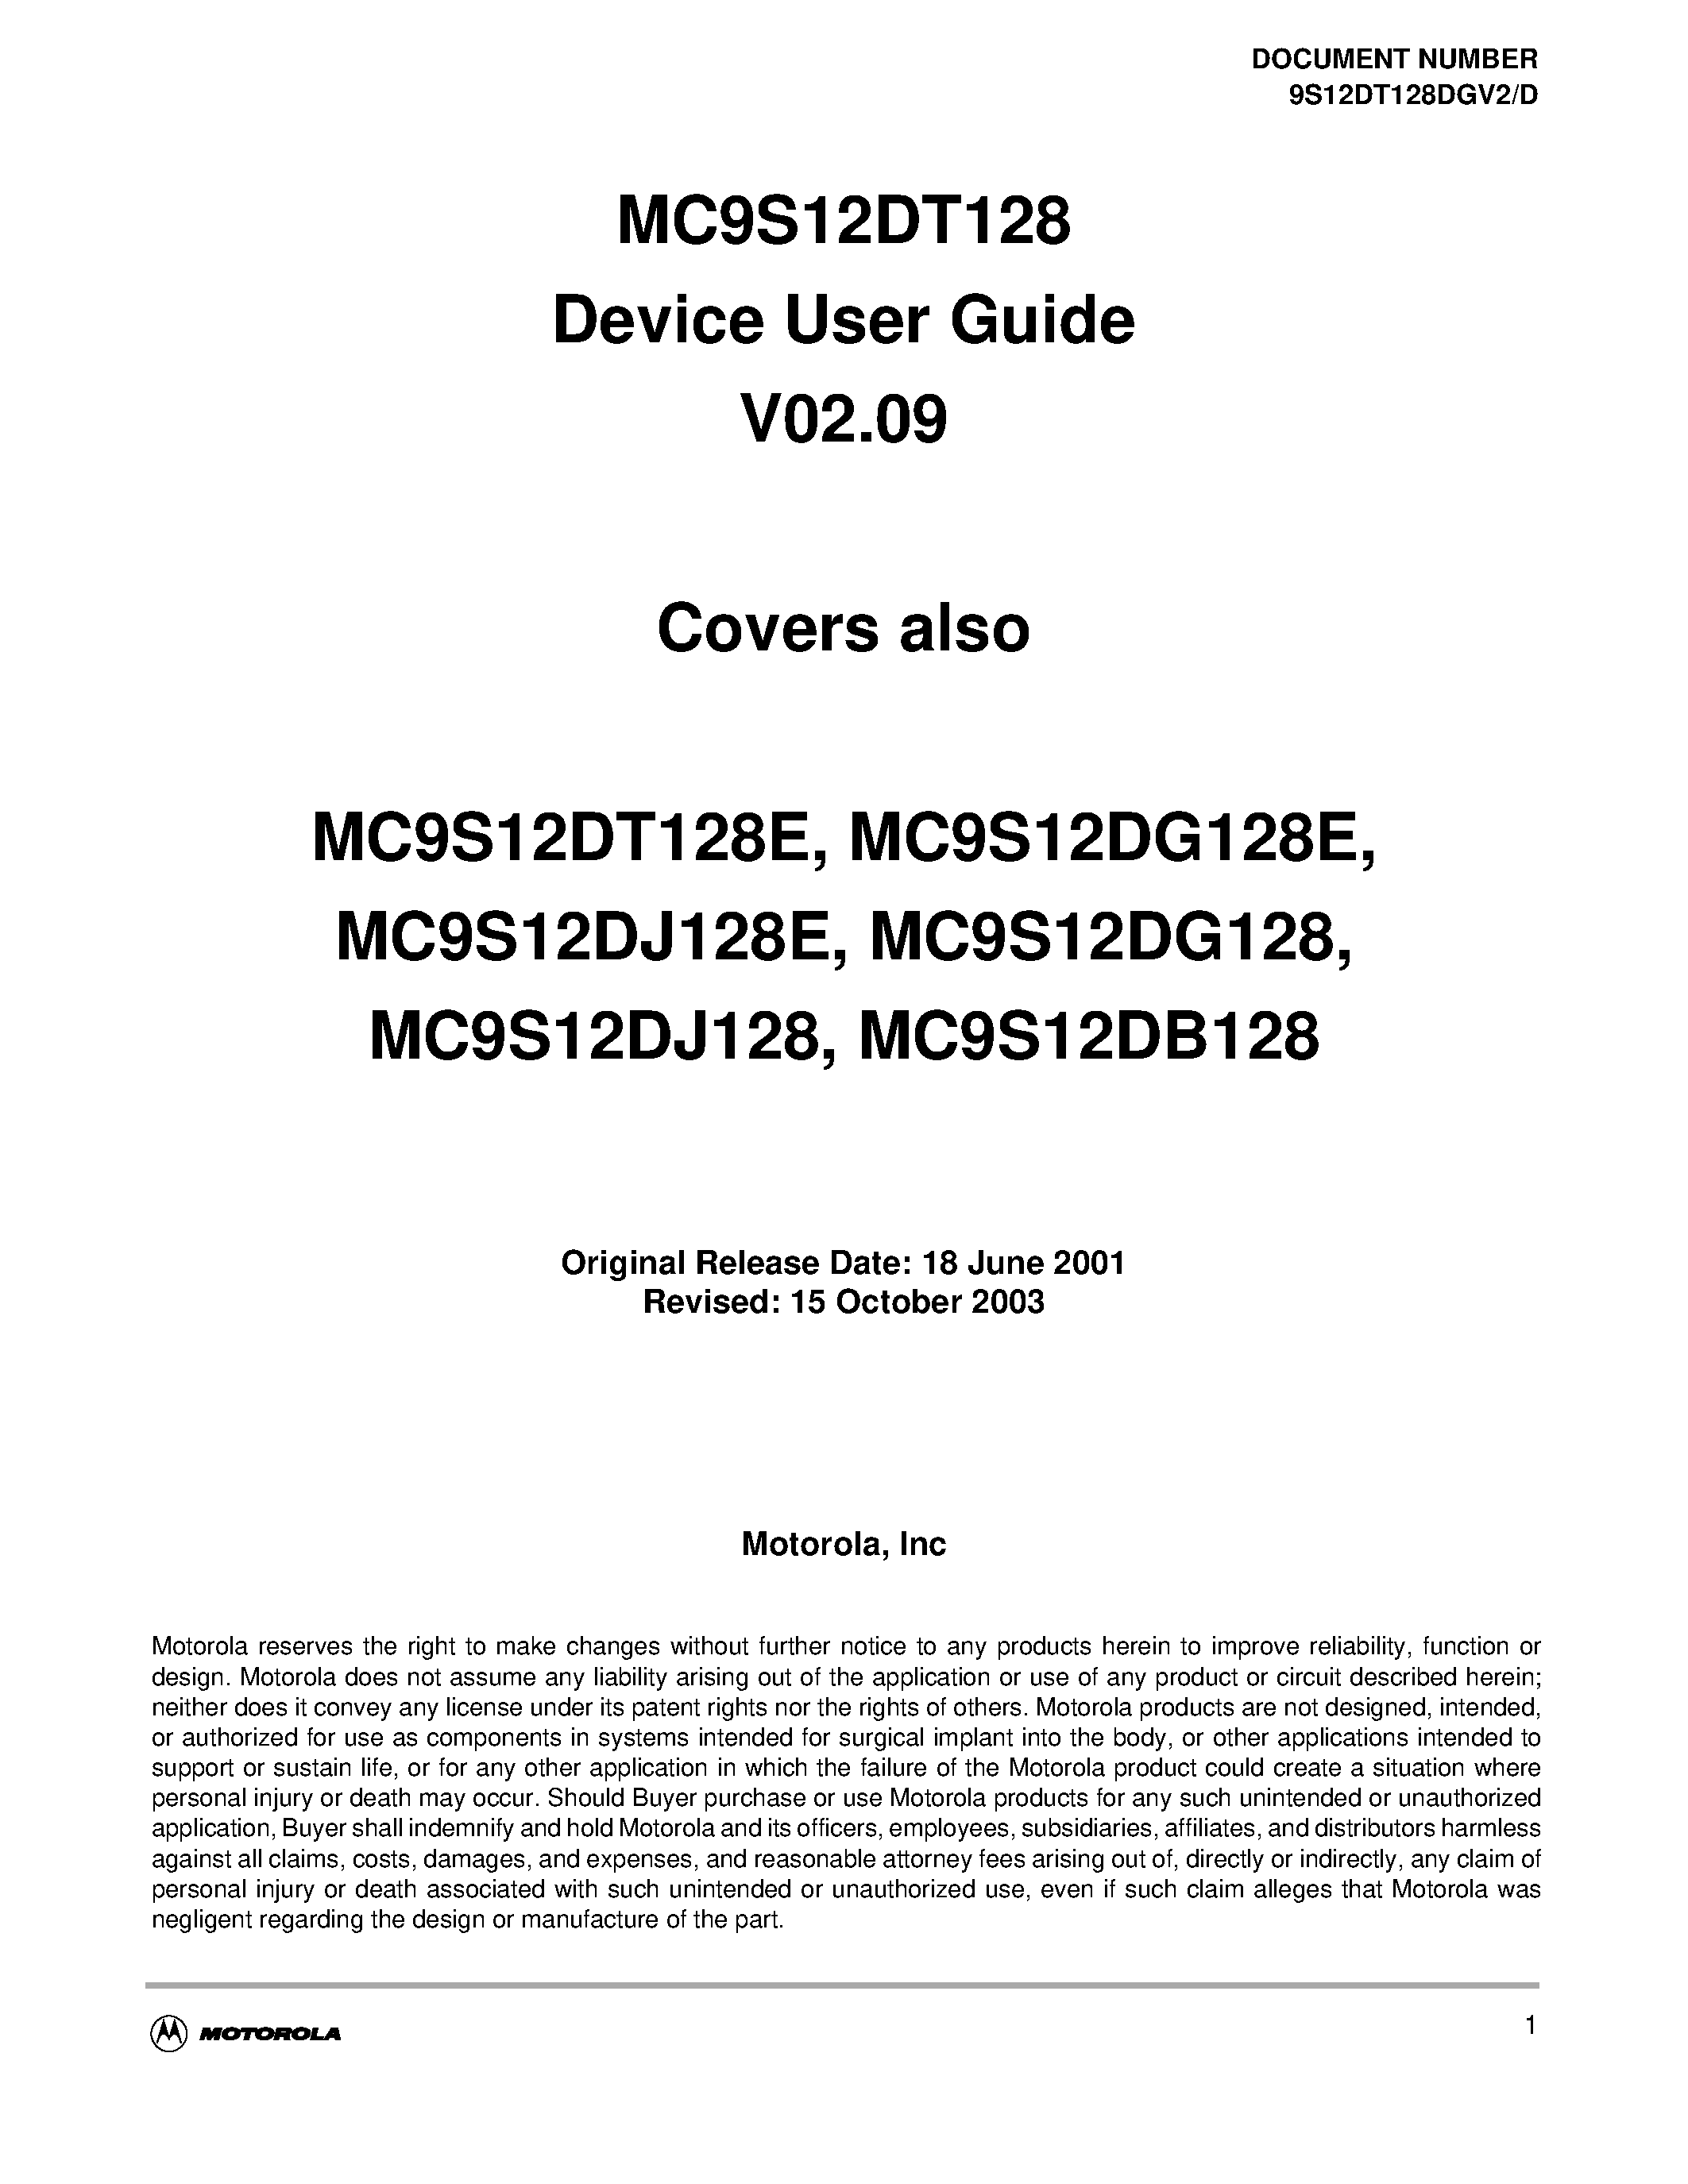 Даташит S12VREGV1D - MC9S12DT128 Device User Guide V02.09 страница 1